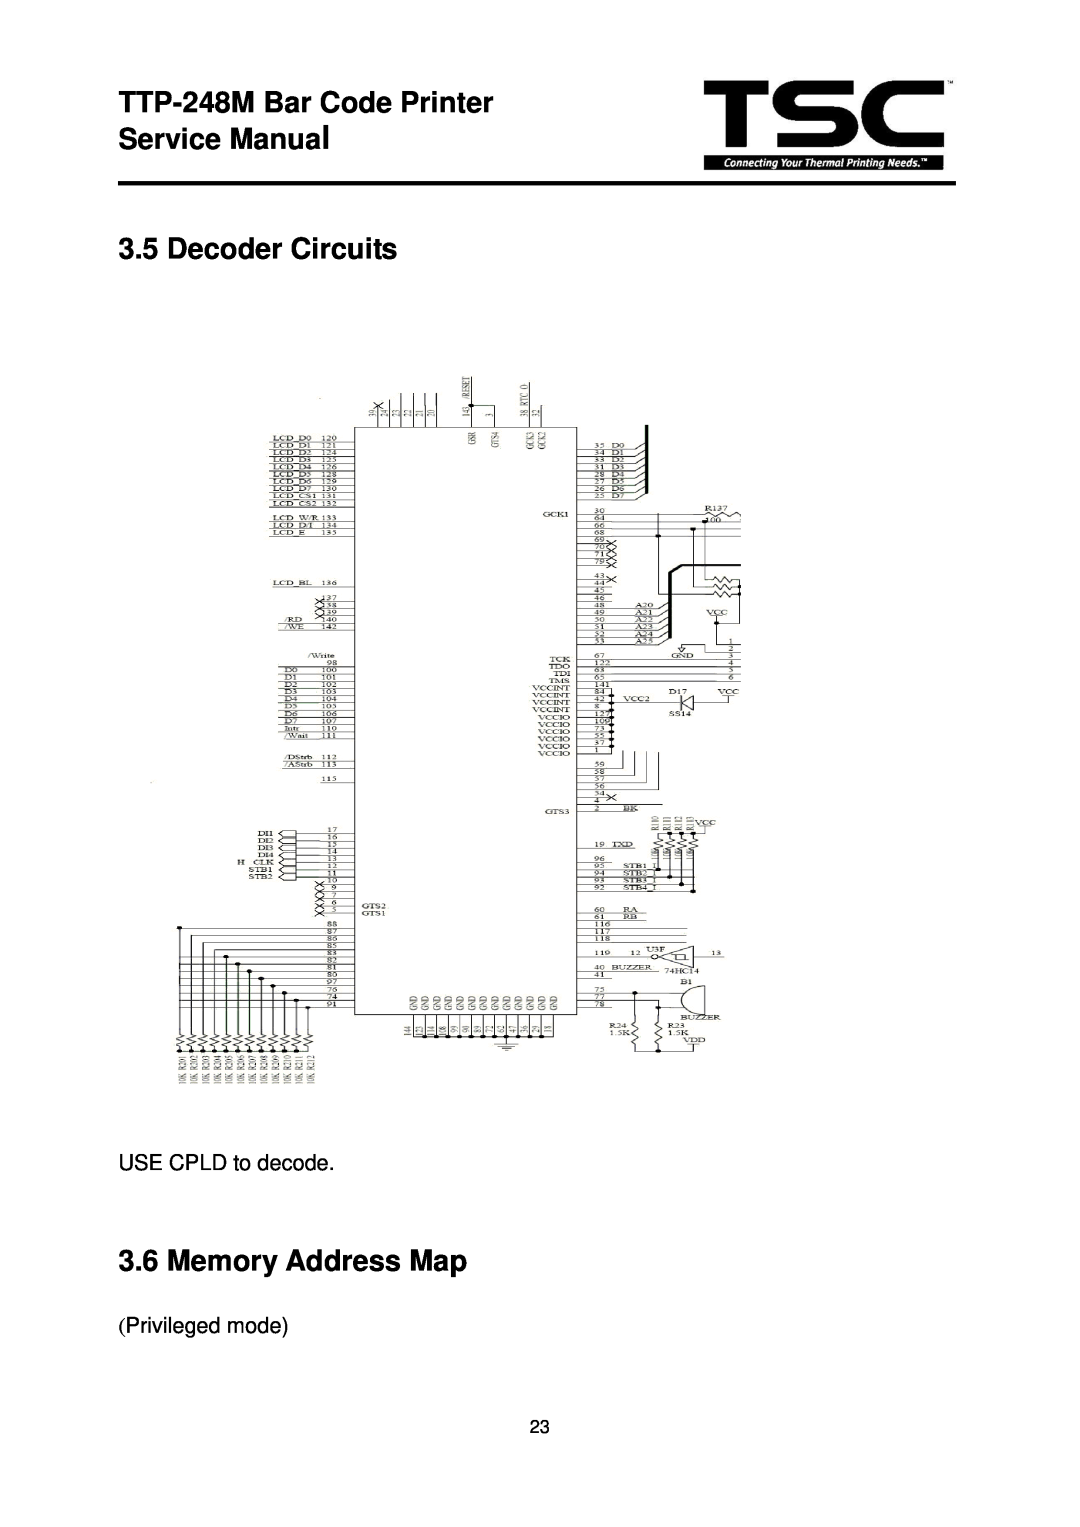 The Speaker Company TTP 248M TTP-248M Bar Code Printer Service Manual 3.5 Decoder Circuits, Memory Address Map 